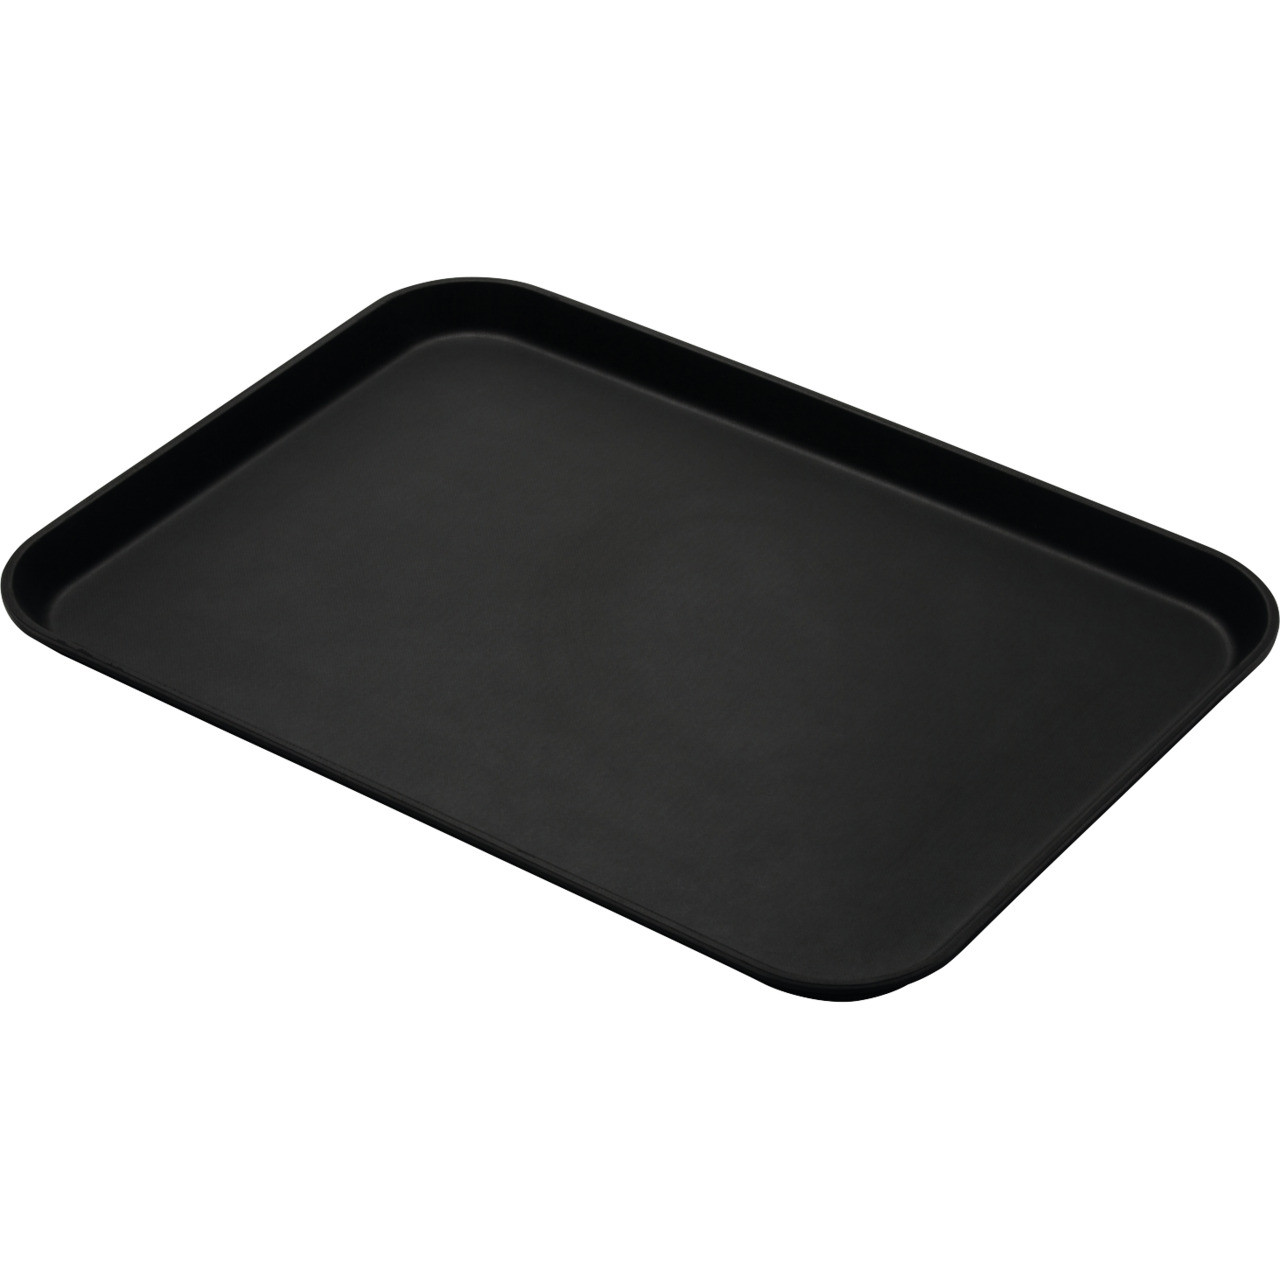 Camtread-Tablett eckig 450 x 650 mm schwarz